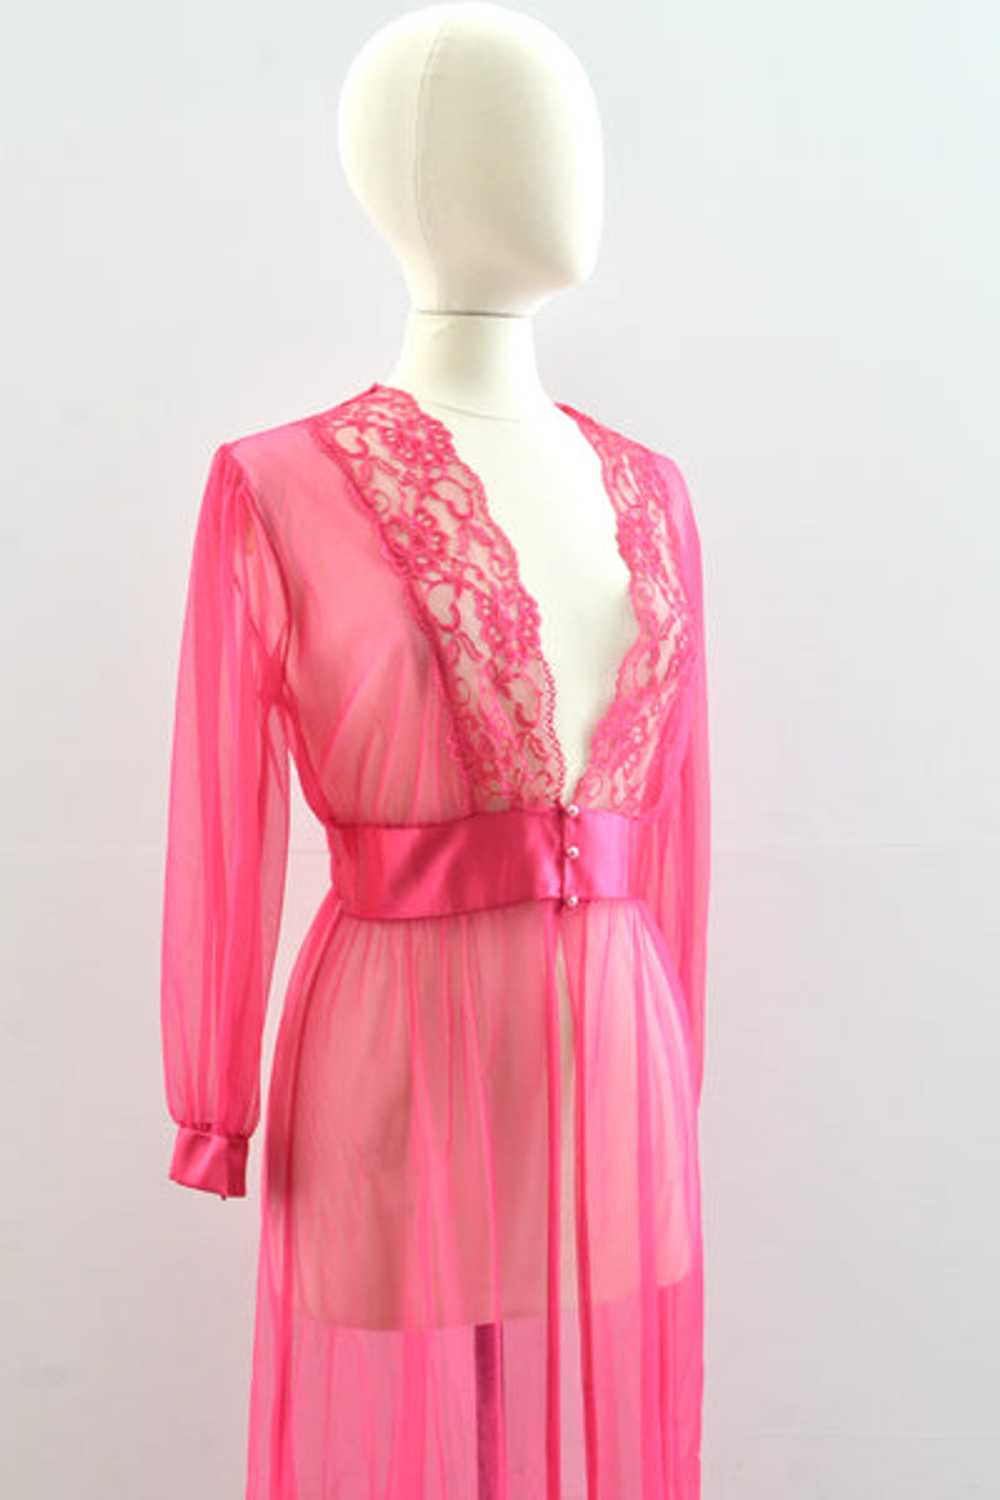 70's Pink Peignoir - image 2